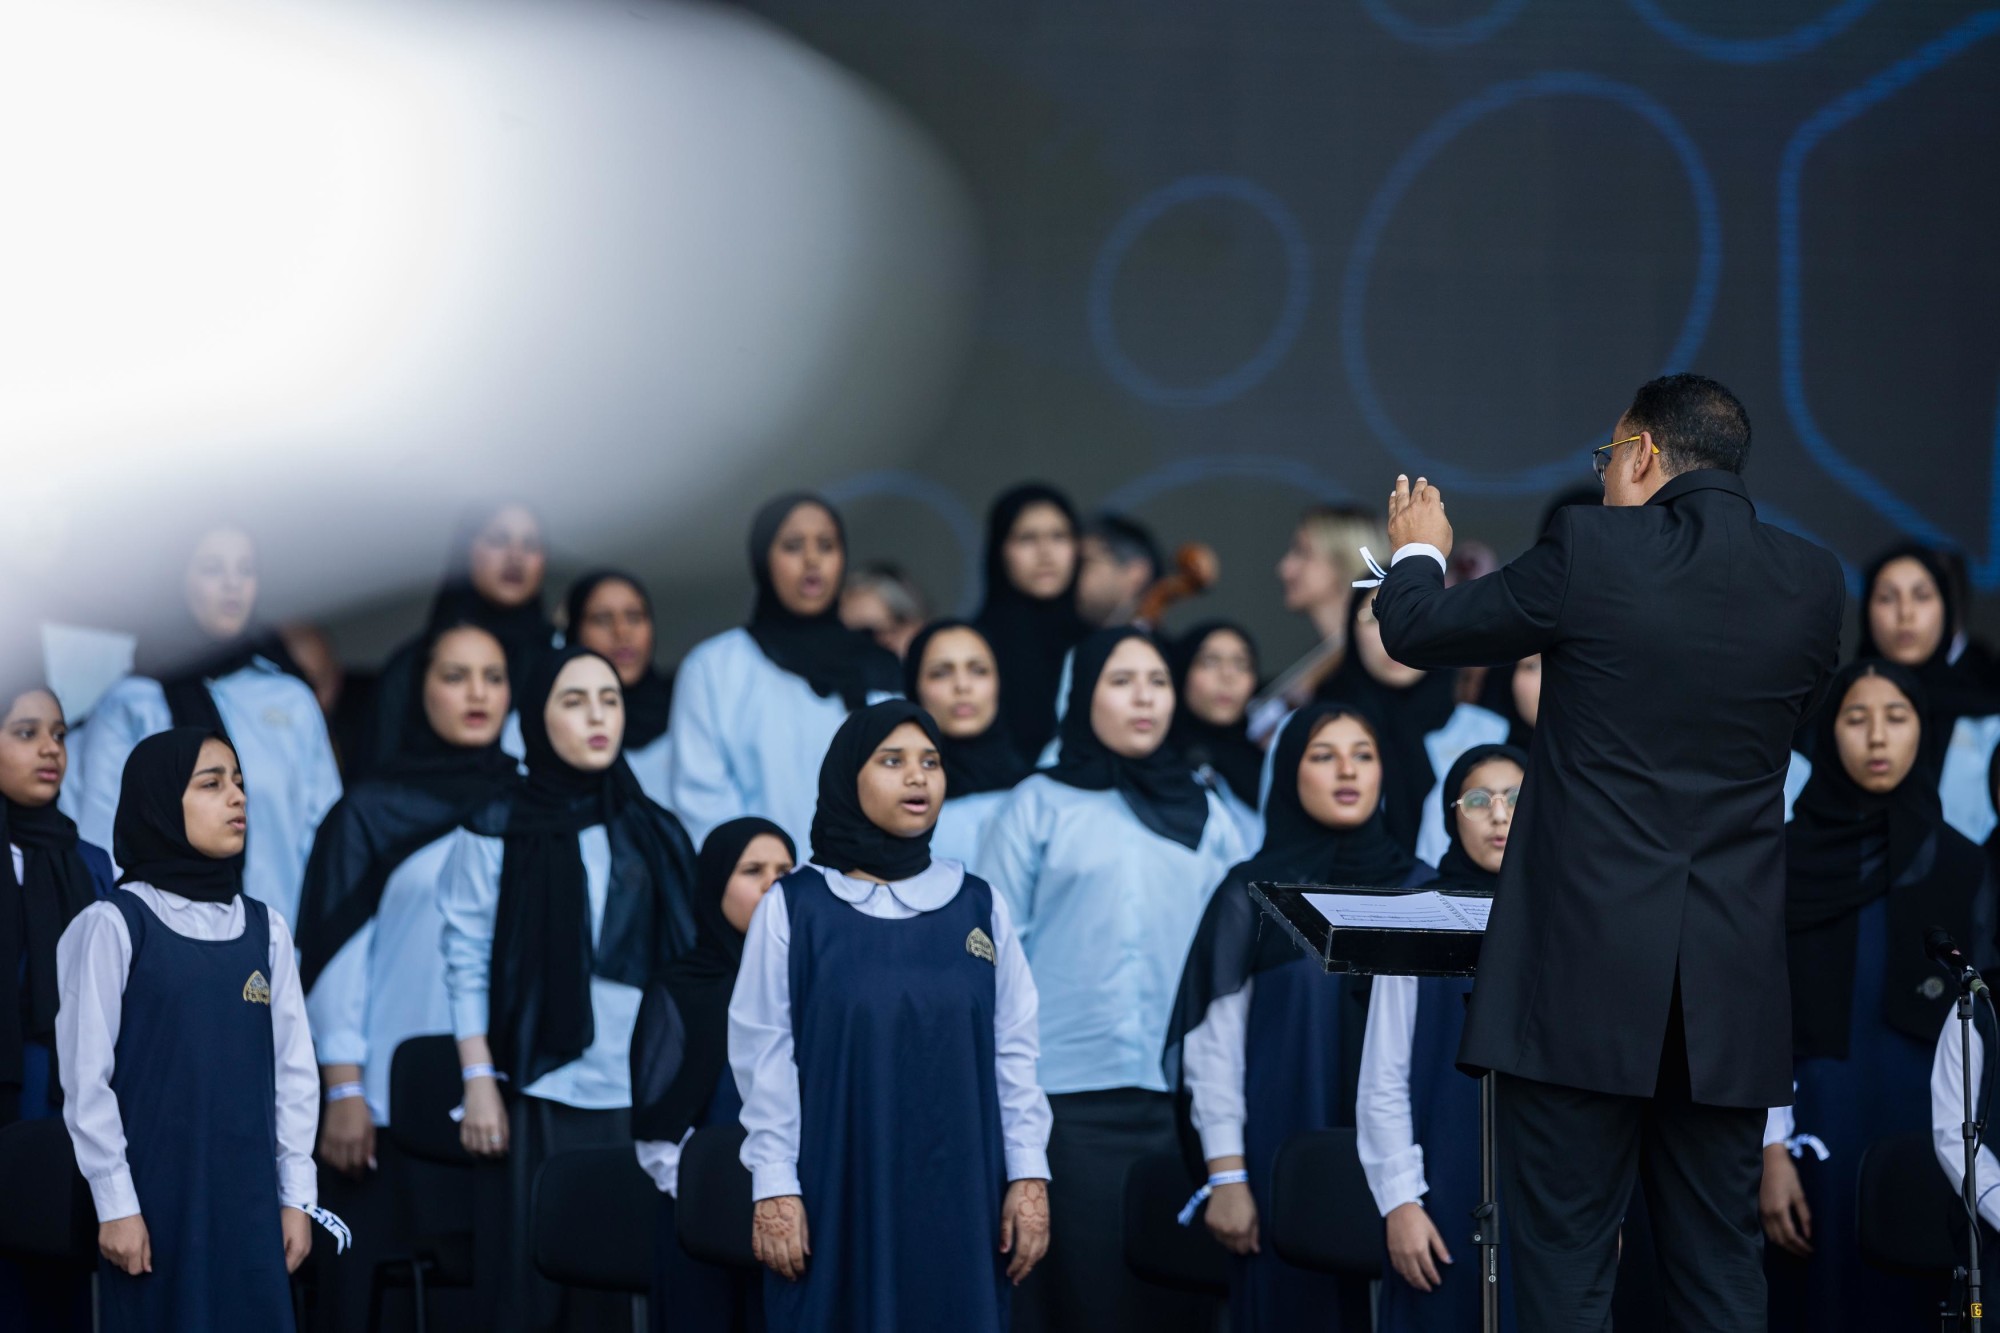 School choirs perform ‘Nasheed Al Wasl’ at Jubilee Stage m66549